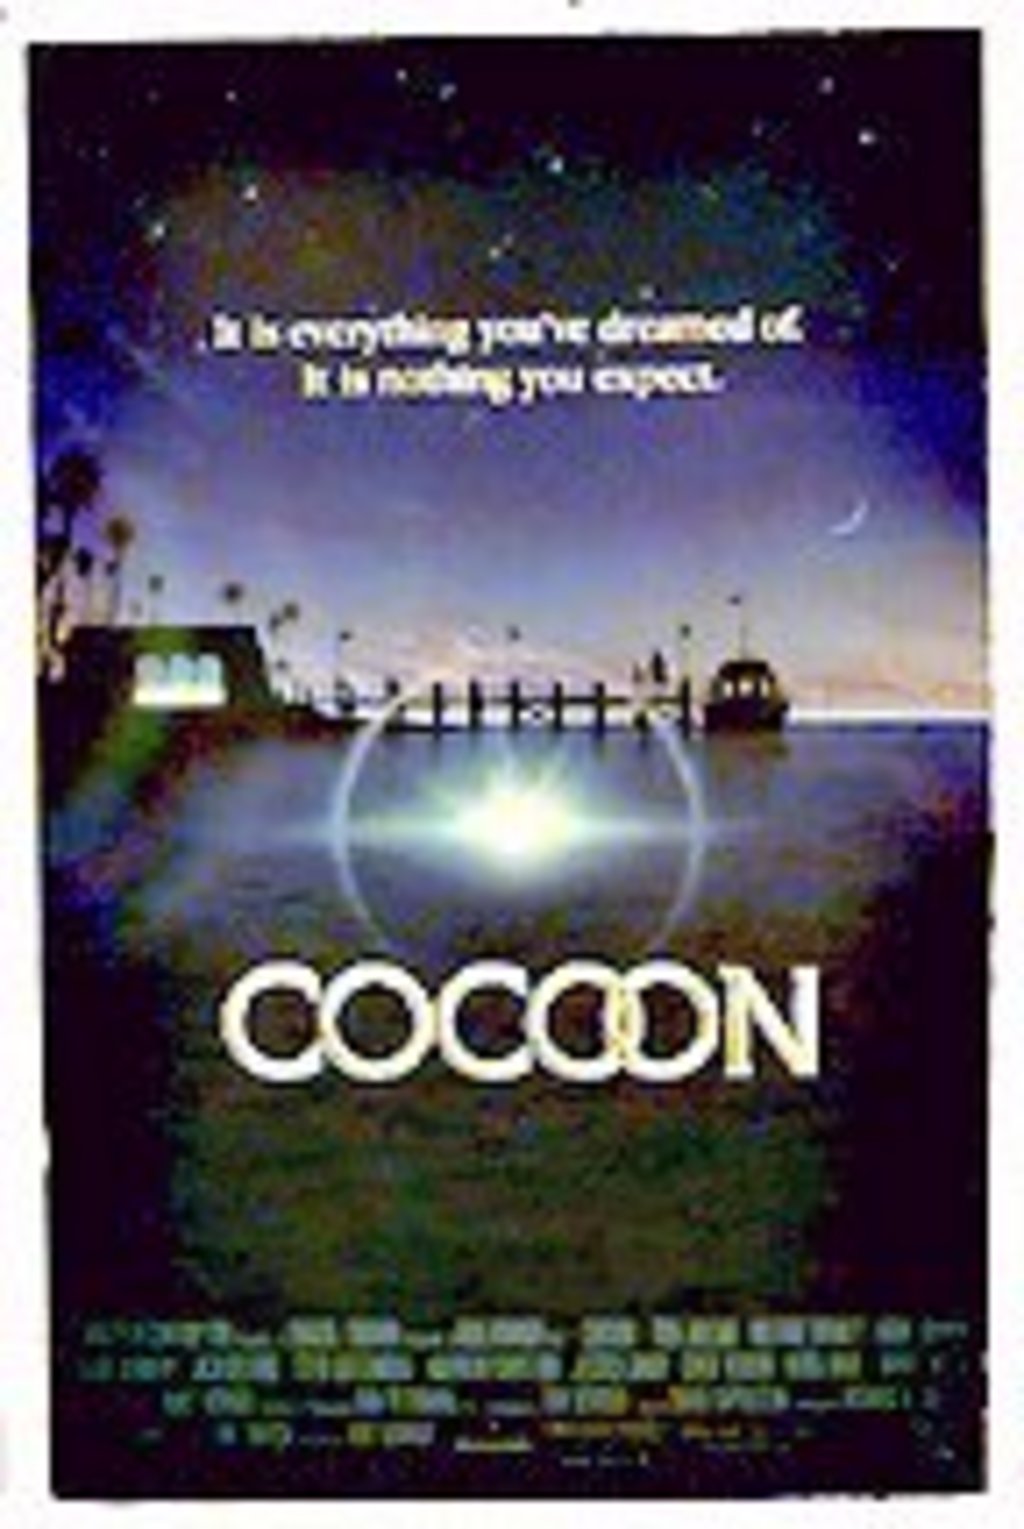 Watch Cocoon on Netflix Today! | NetflixMovies.com